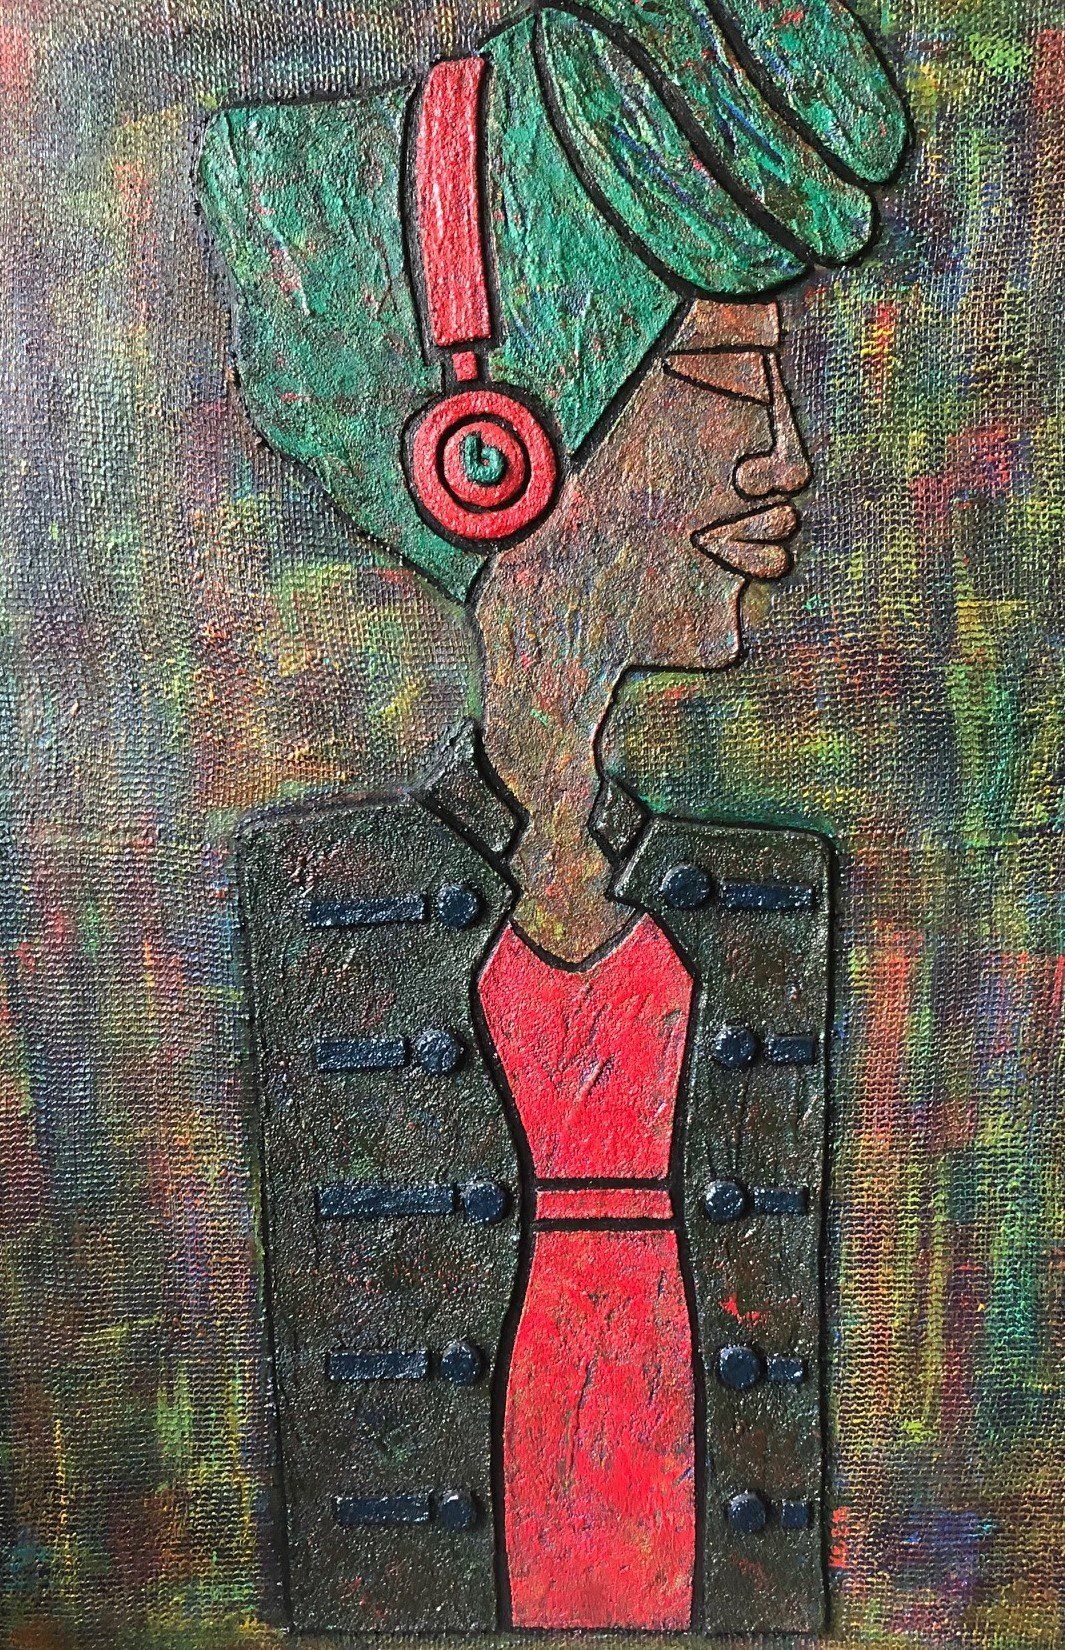 A Black Woman Art Piece 